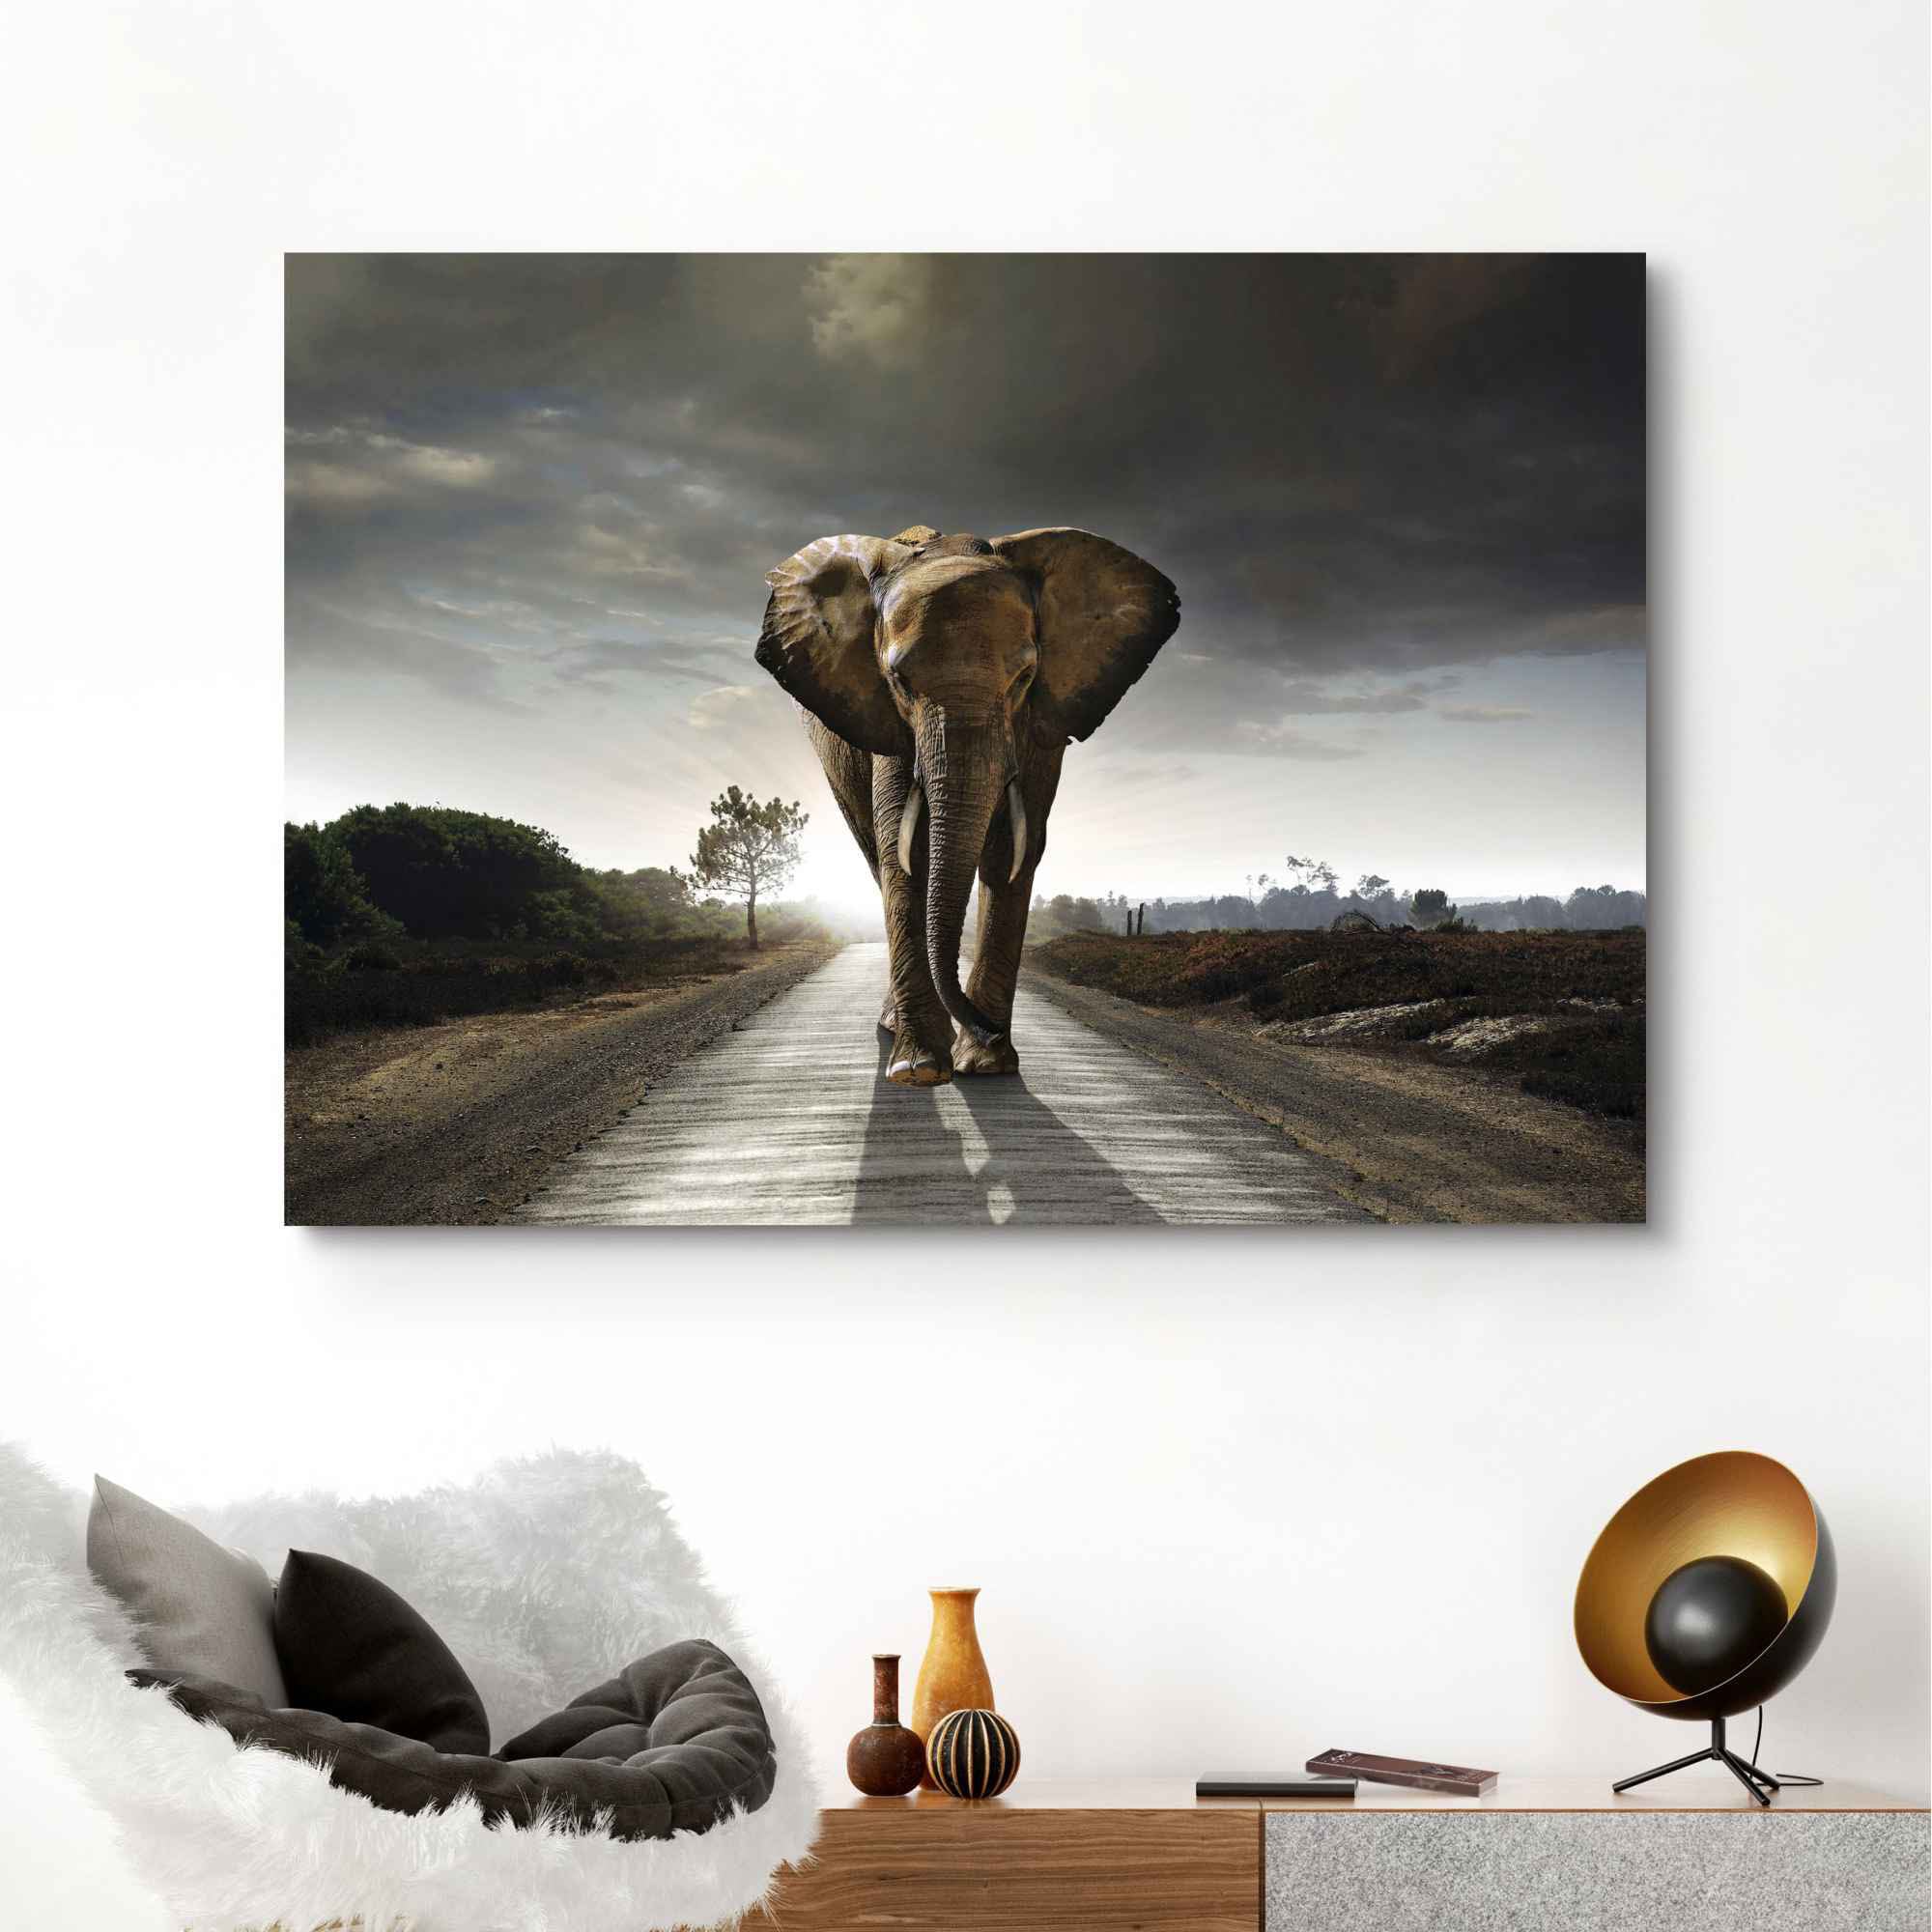 - - Reinders! OTTO Wandbild im Elefant kaufen (1 »Elefantenkönig Online St.) Natur«, Shop Tiermotiv